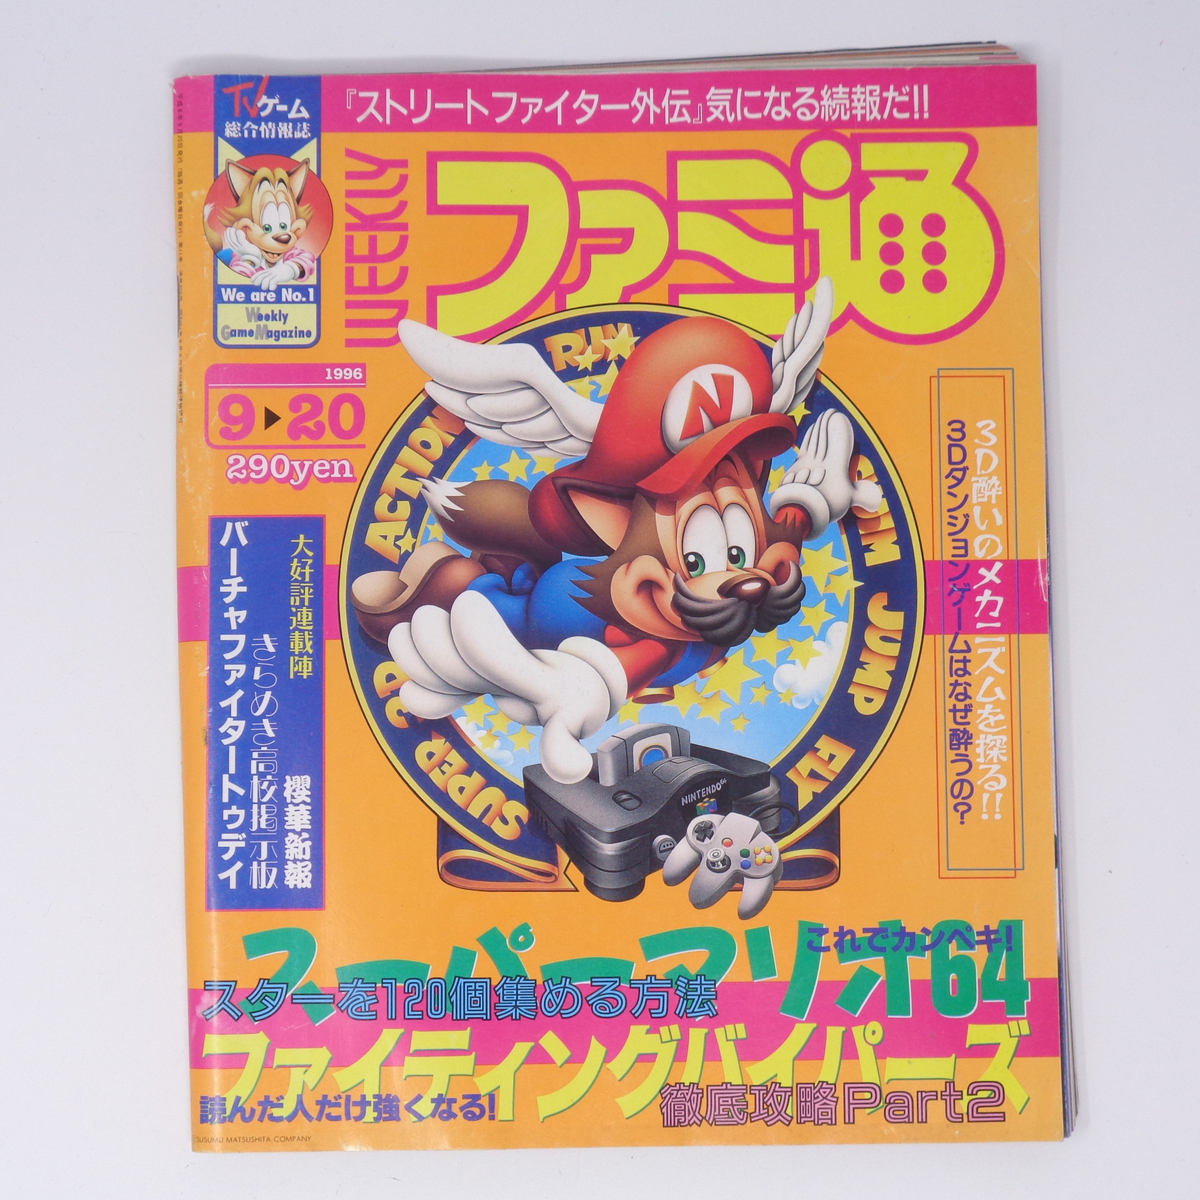 WEEKLYファミ通 1996年9月20日号No.405 /スーパーマリオ64/ファイティングバイパーズ/ゲーム雑誌[Free Shipping]